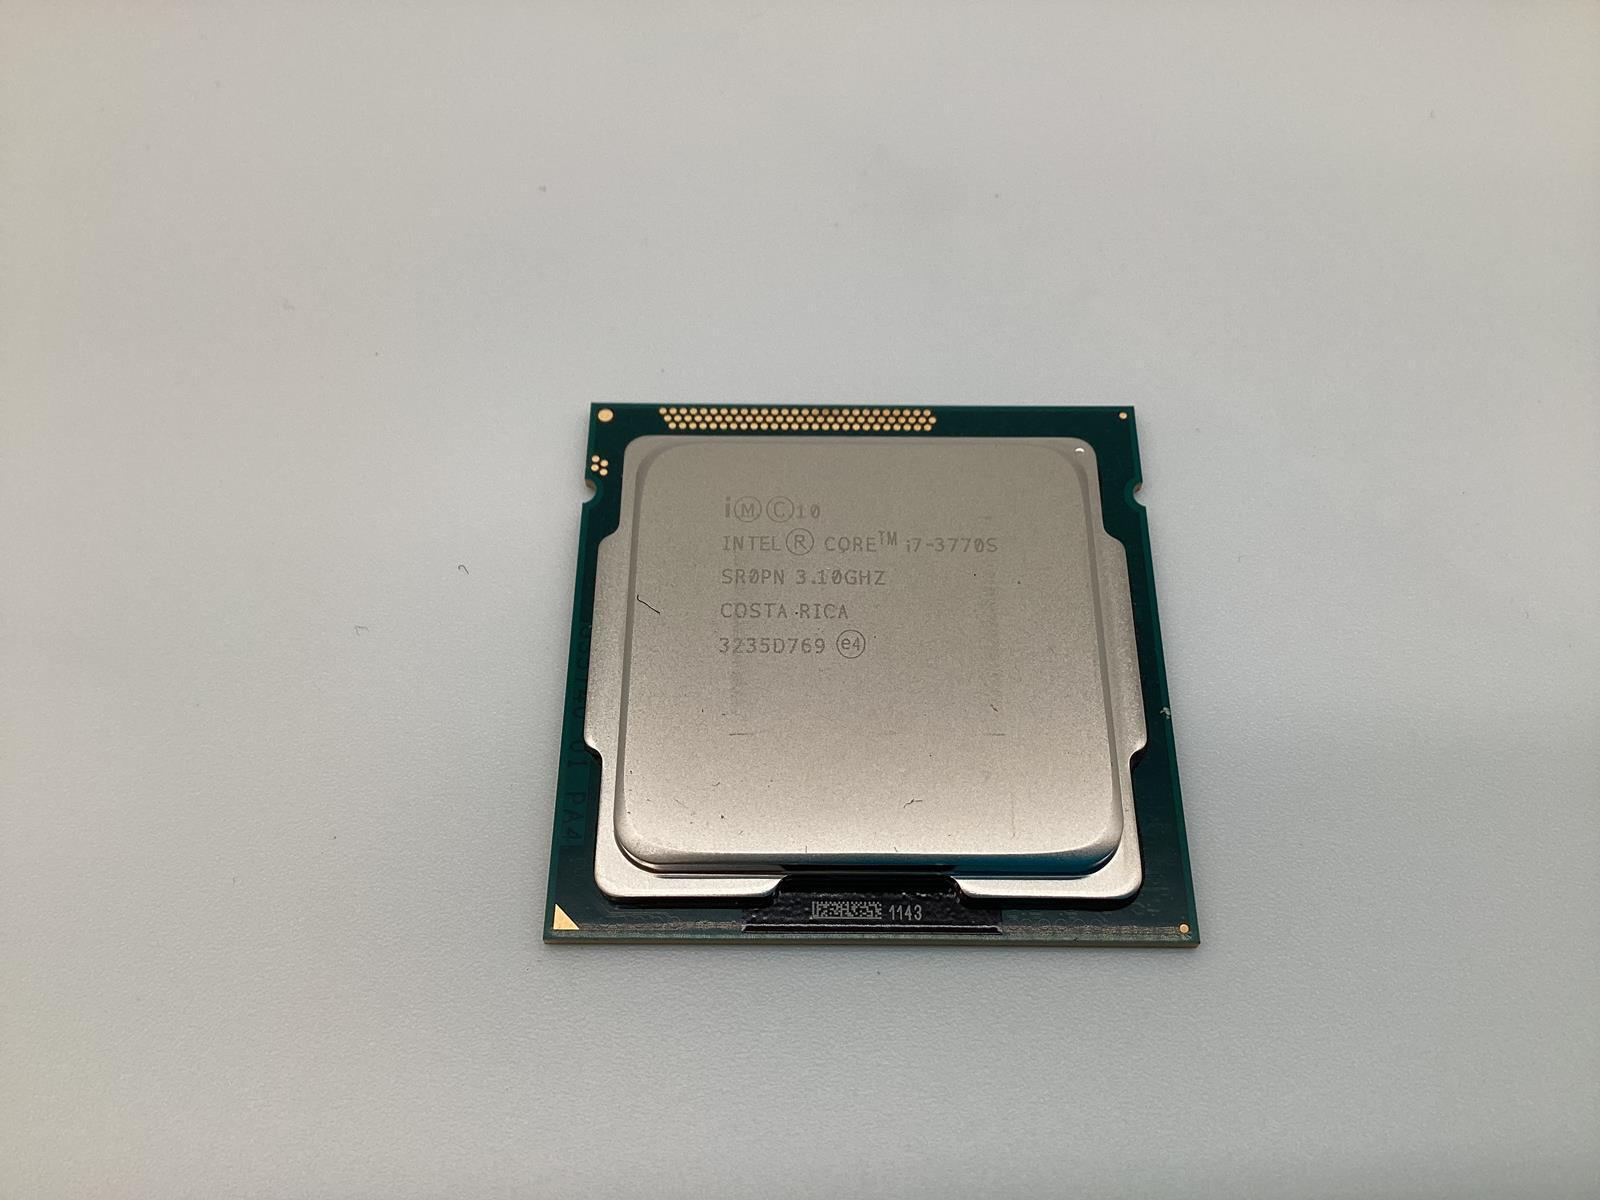 Intel i7-3770S CPU 3.10GHz